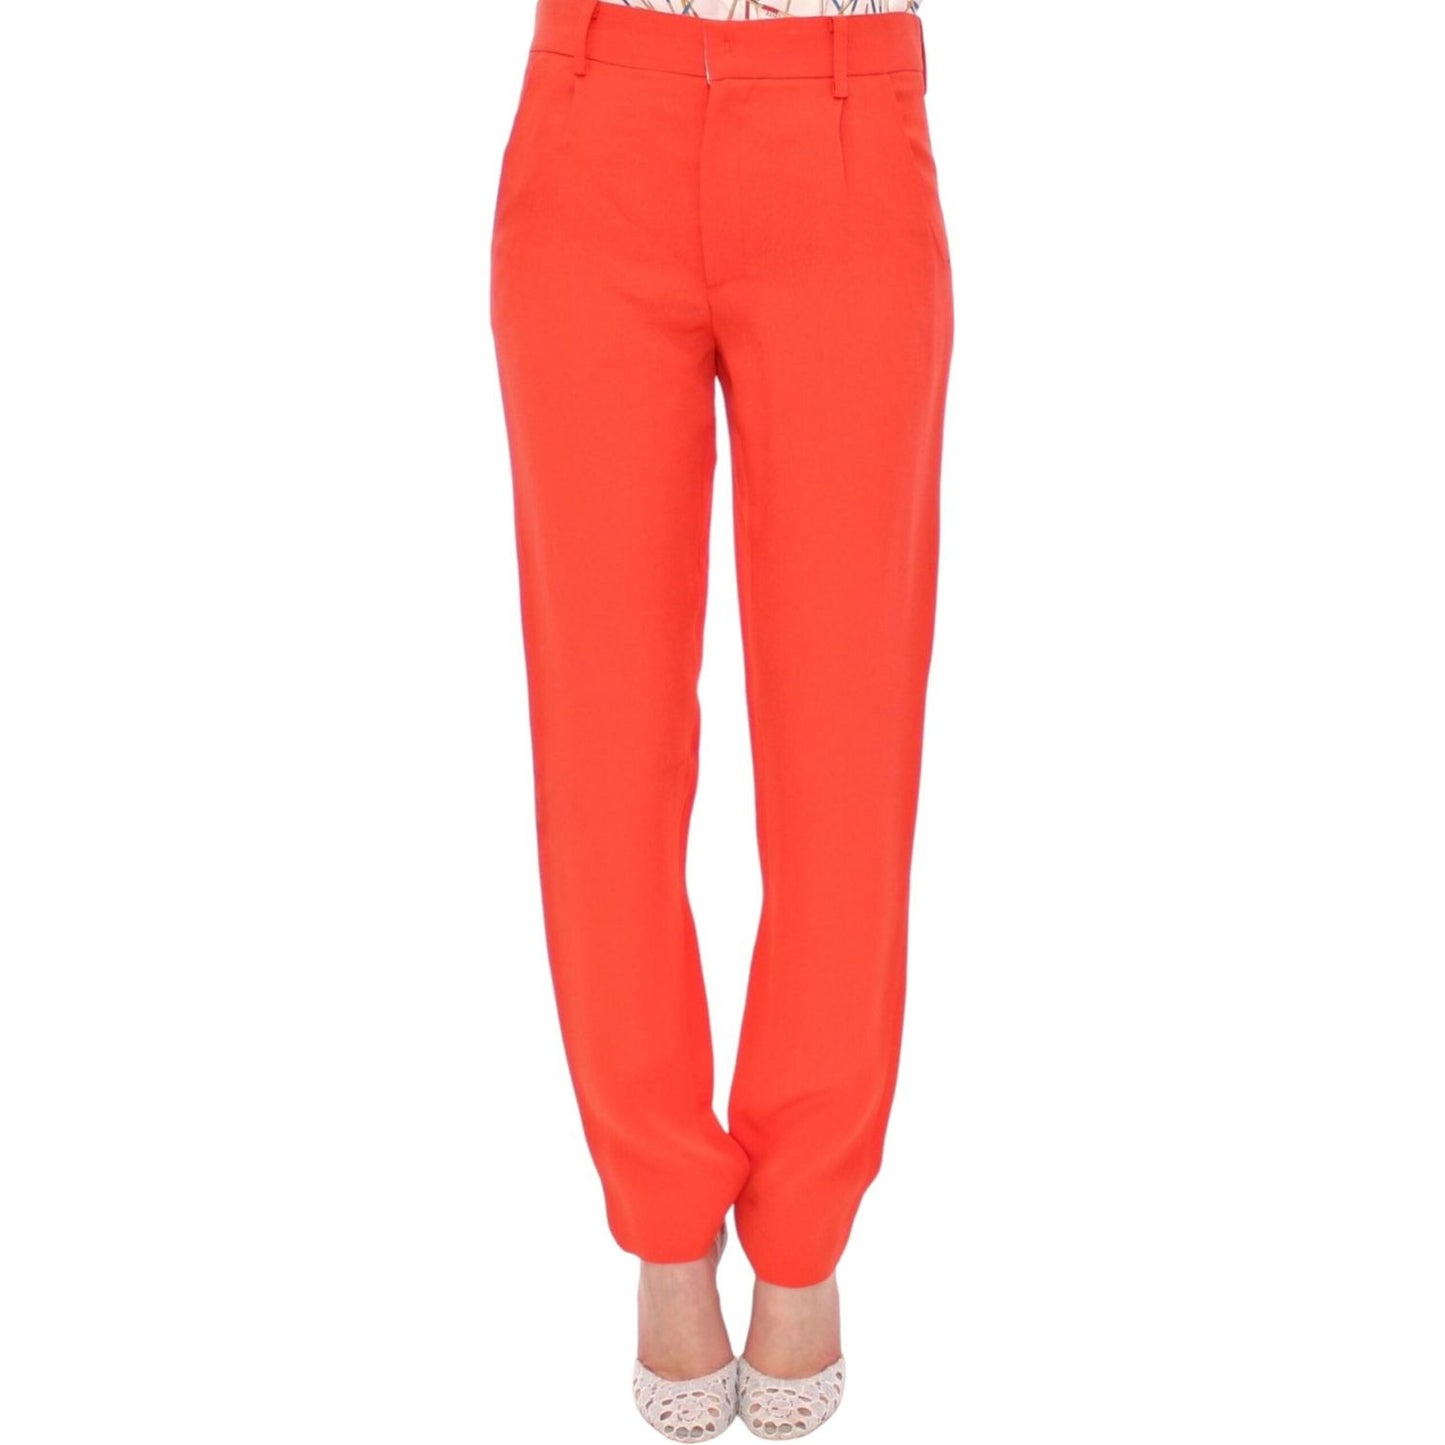 CO|TE Chic Orange Boyfriend Pants - Italian Crafted orange-boyfriend-stretch-pants